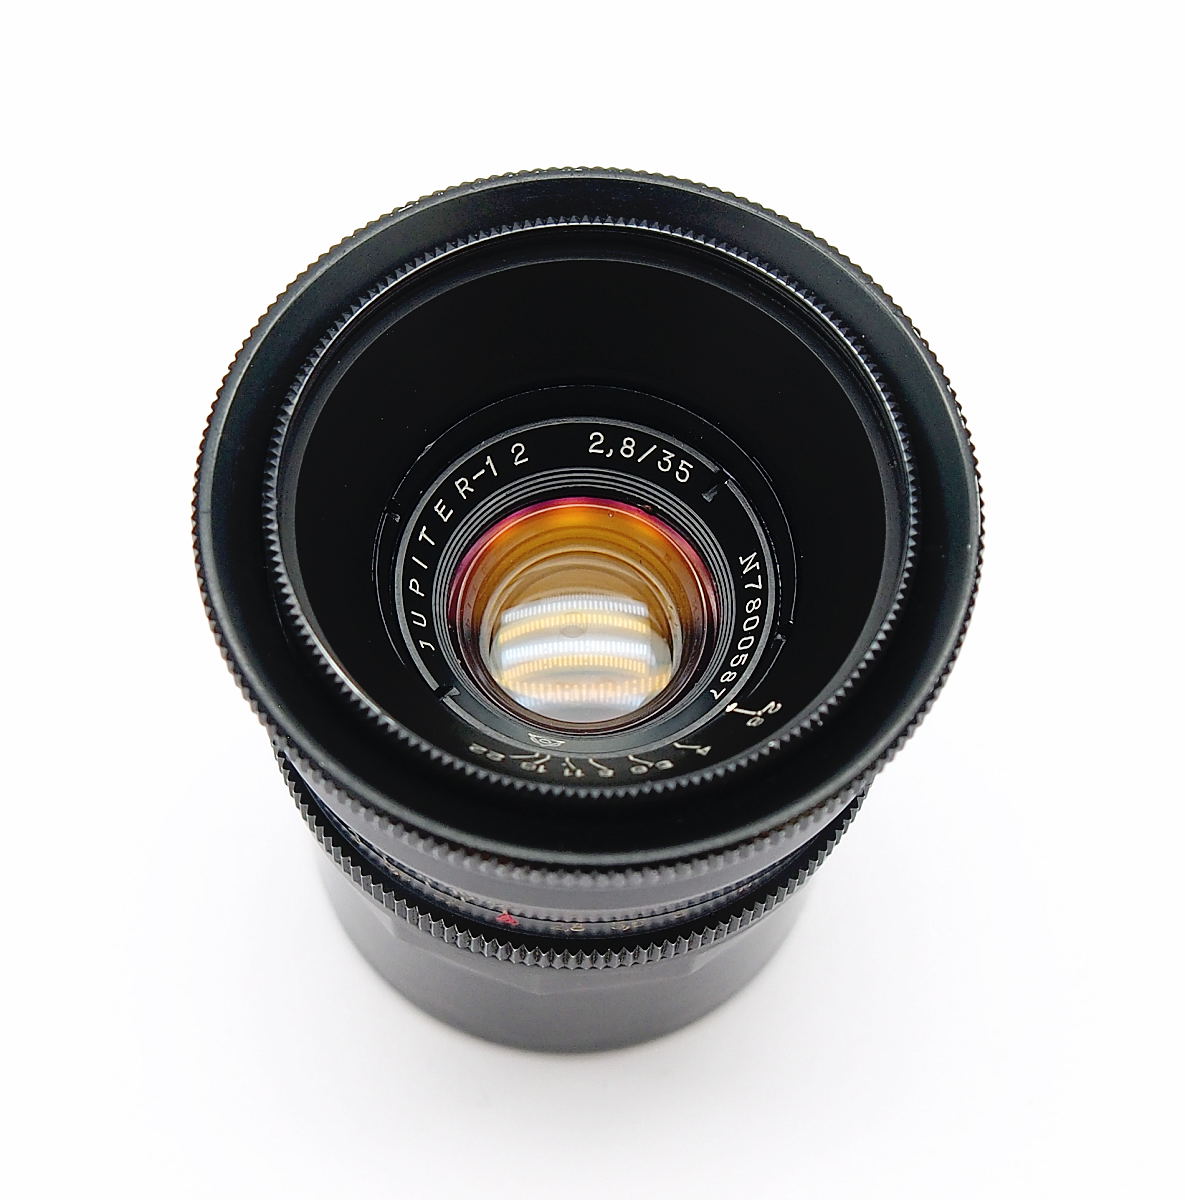 Jupiter-12 35mm F2.8 (Biogon) Lens in L39 Mount #9249